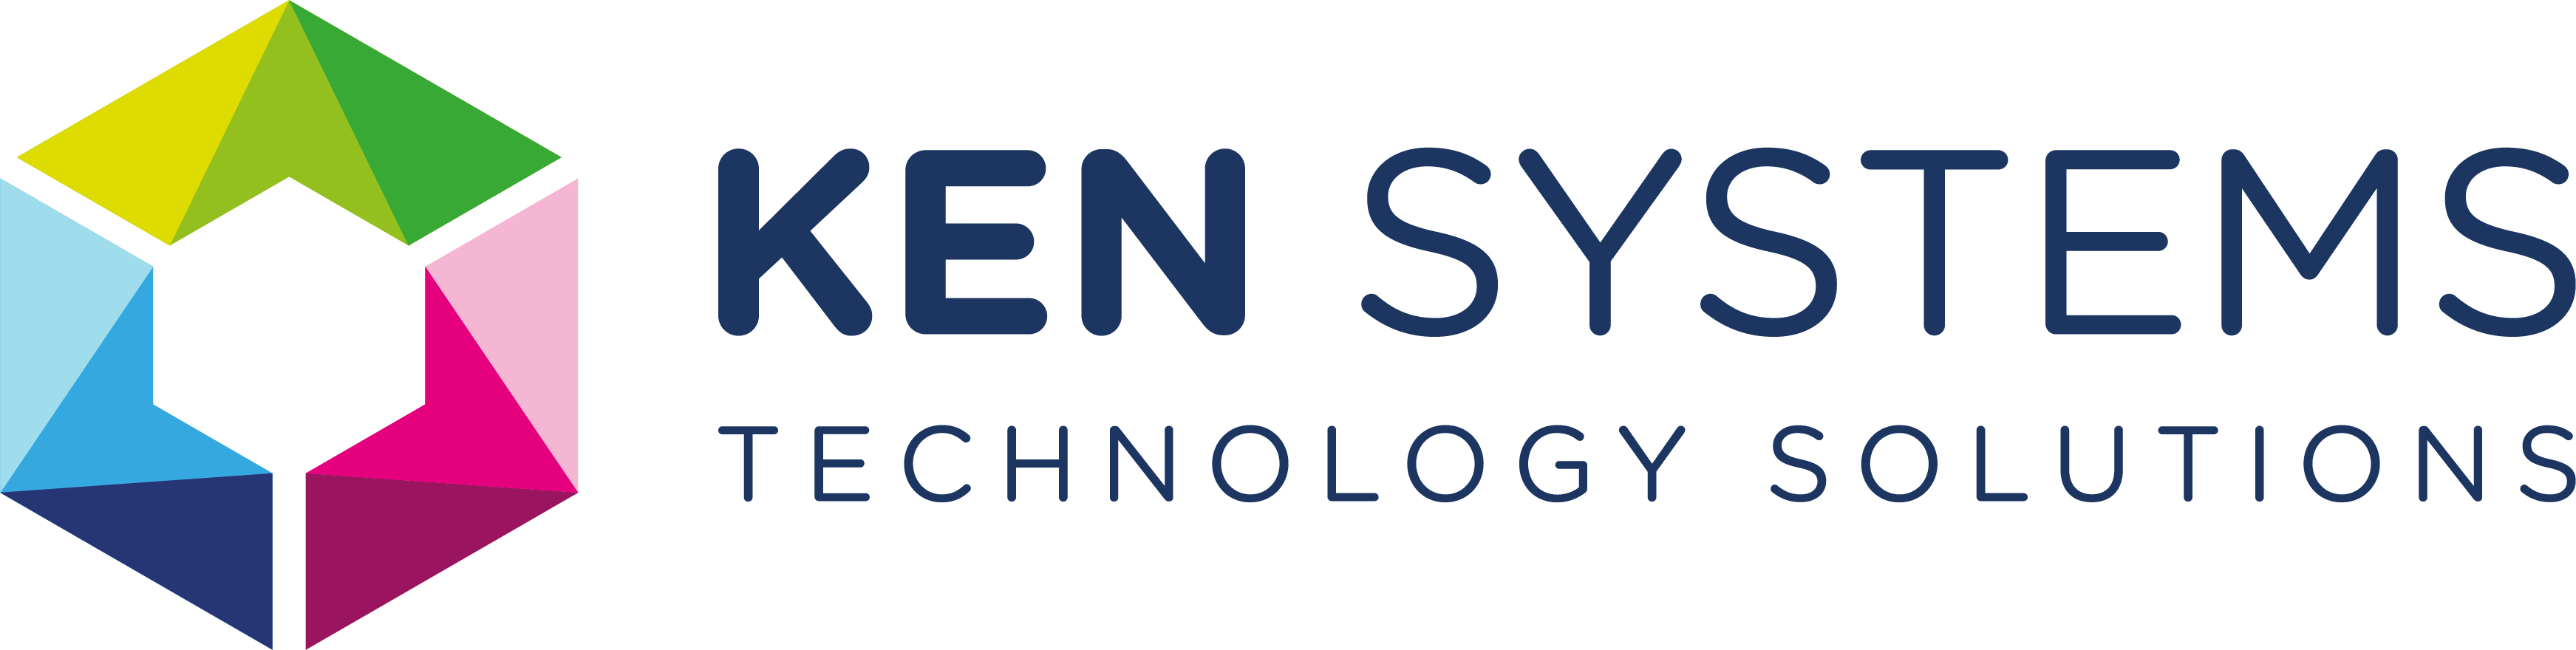 Ken Systems, Inc.